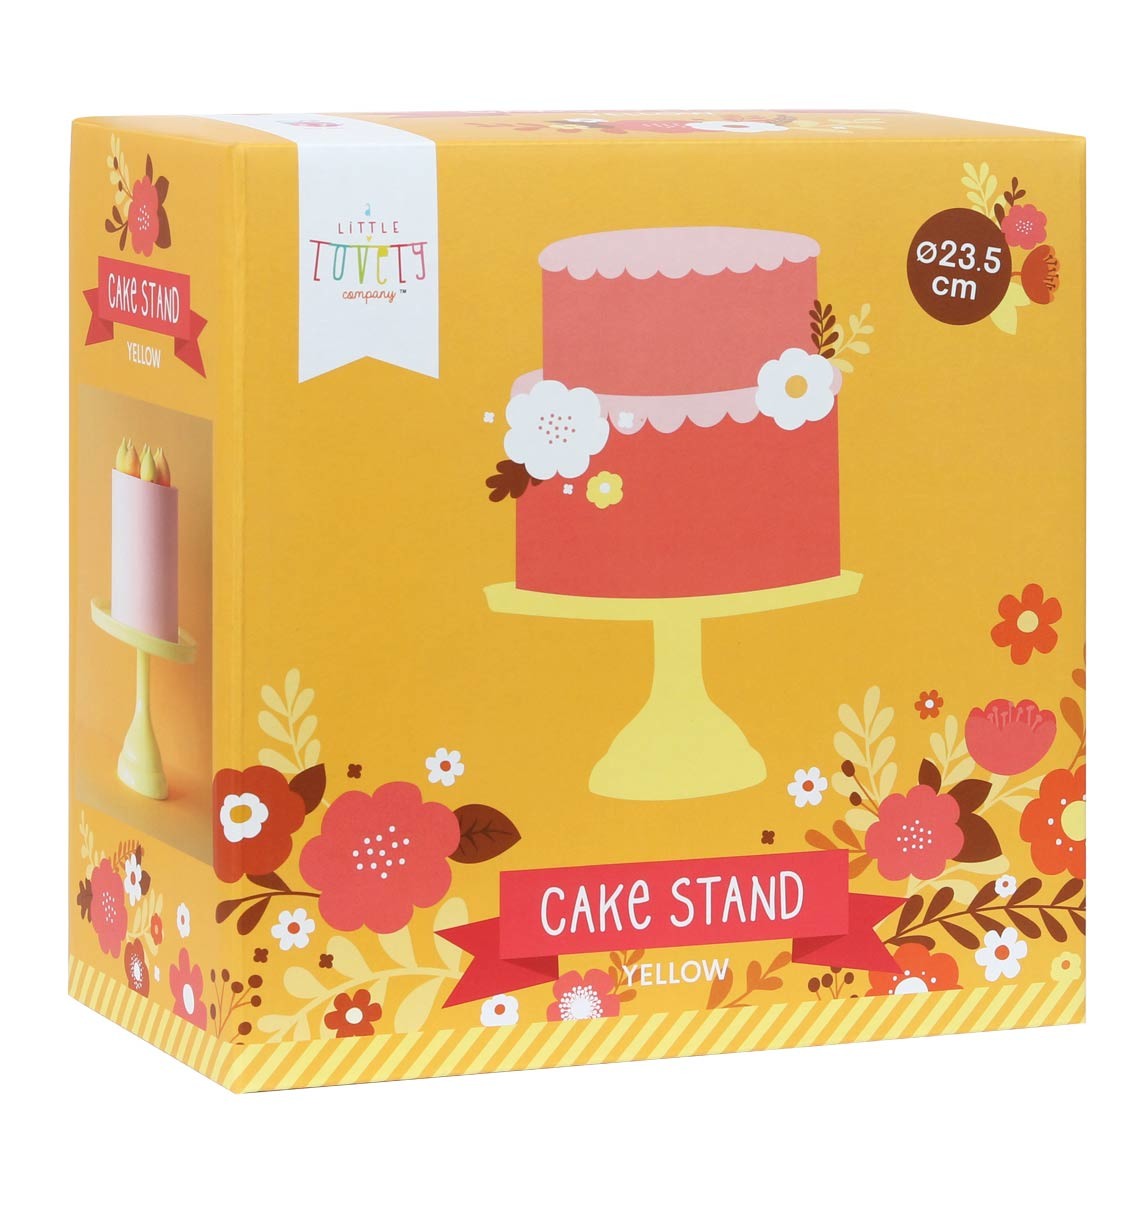 ALLC Cake Stand Small PTCSYL03 jaune 23.5x12x23.5cm